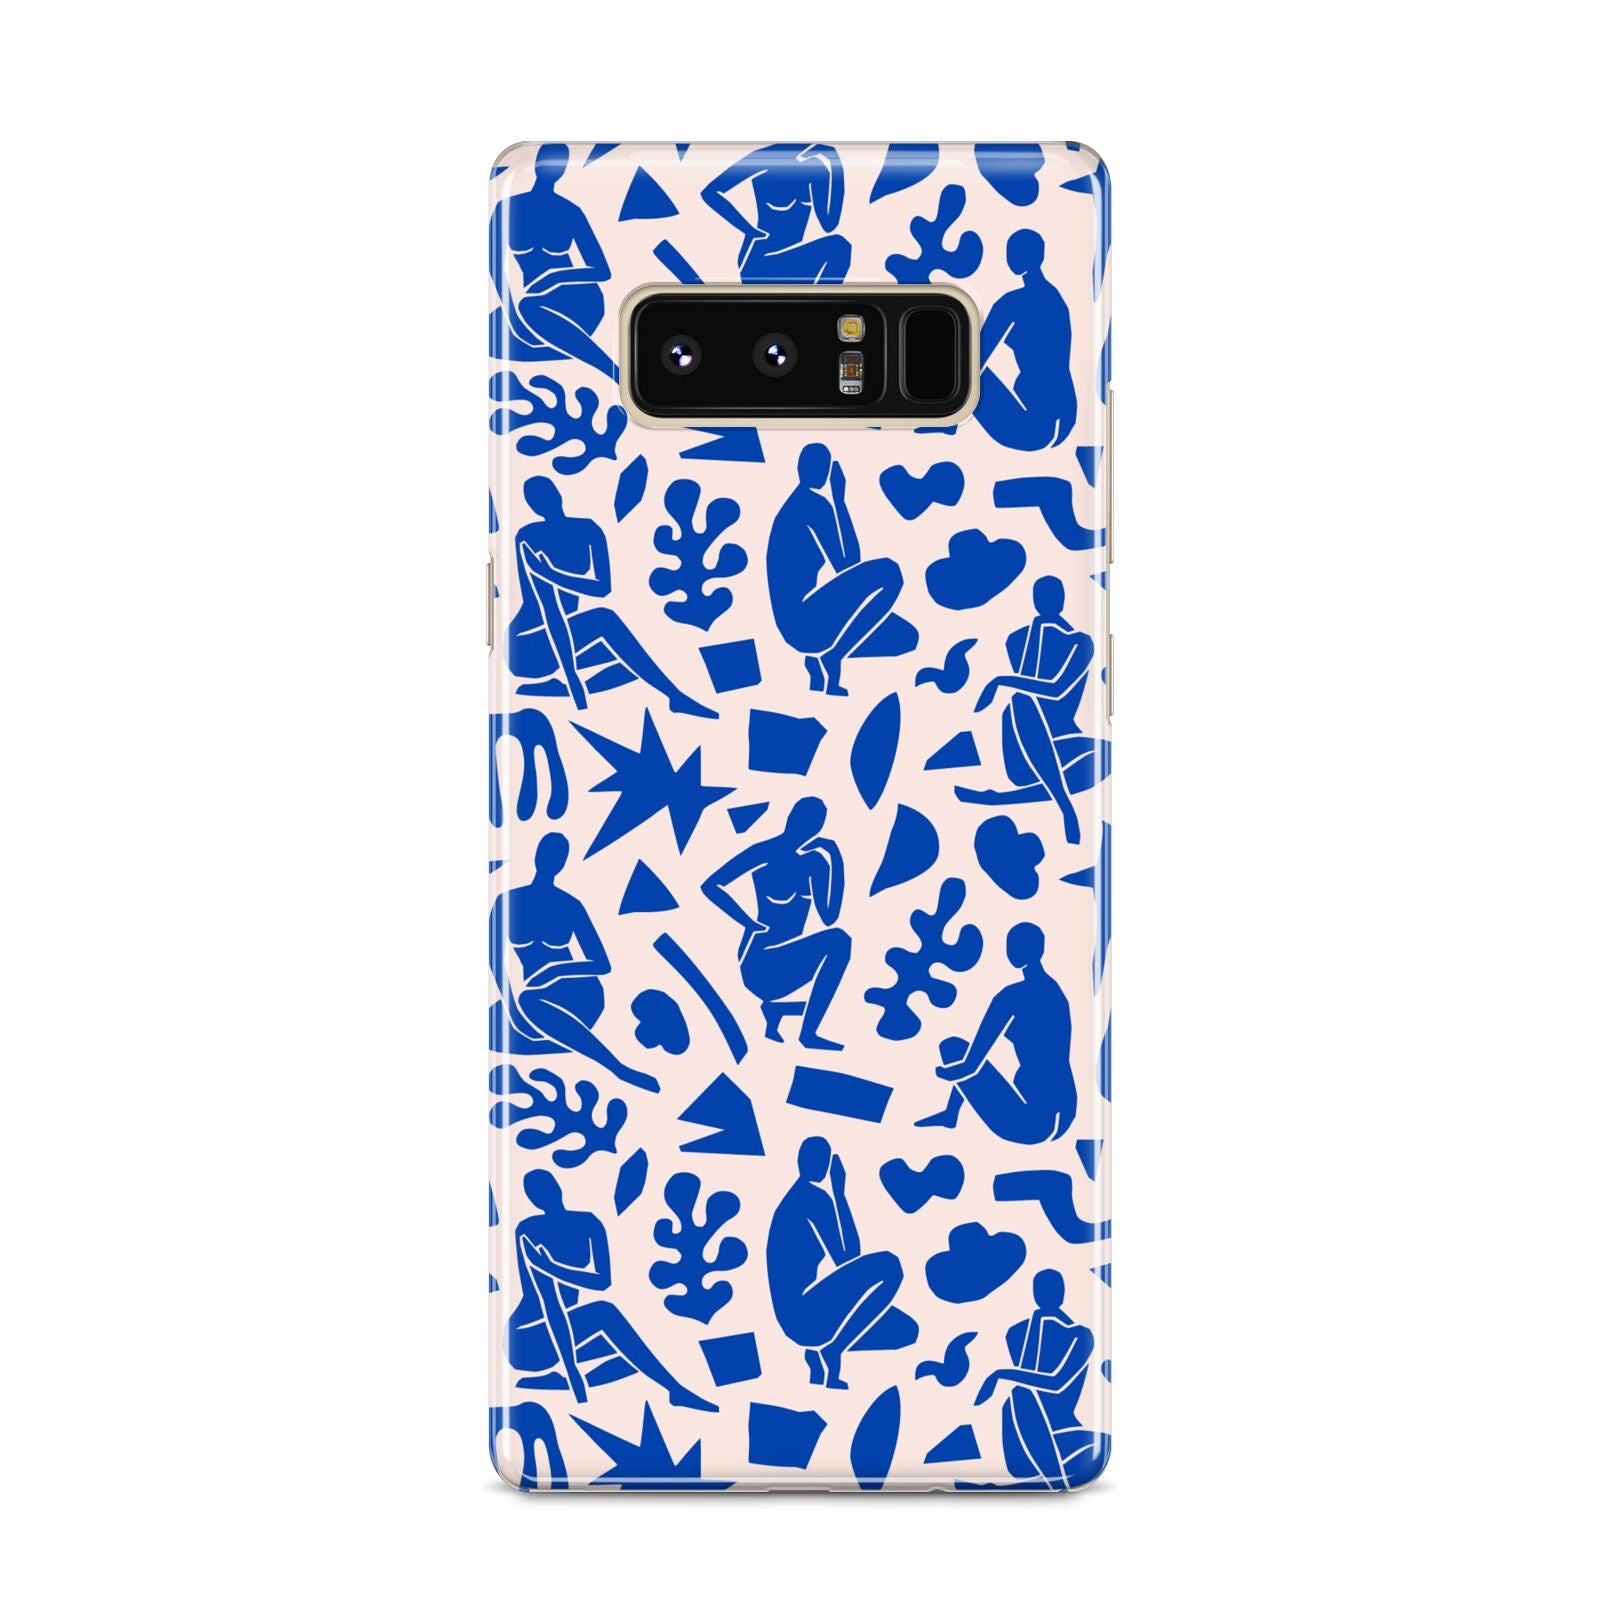 Abstract Art Samsung Galaxy S8 Case